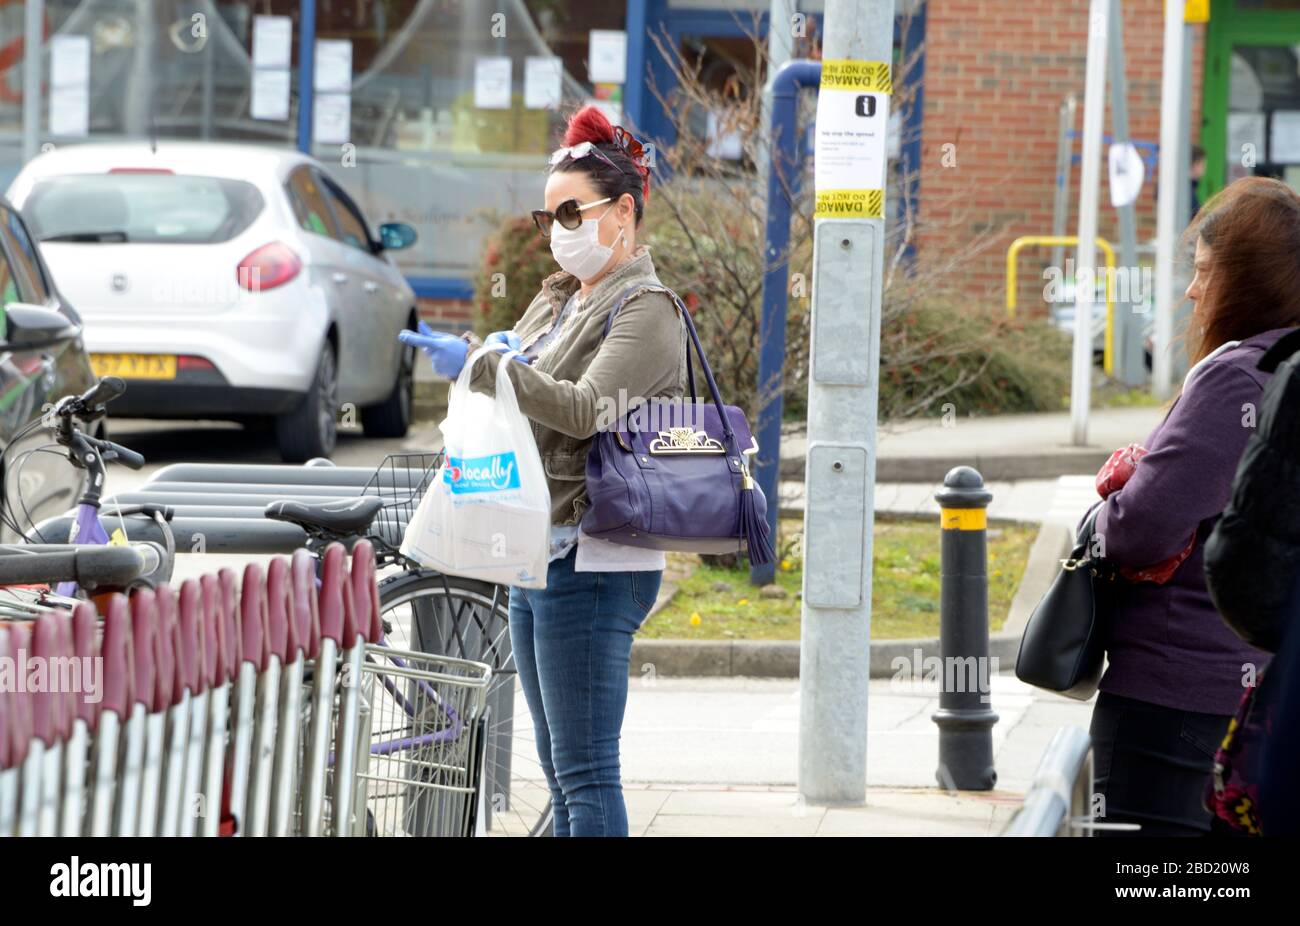 Lady in Supermarket queue, in anti virus mask Stock Photo